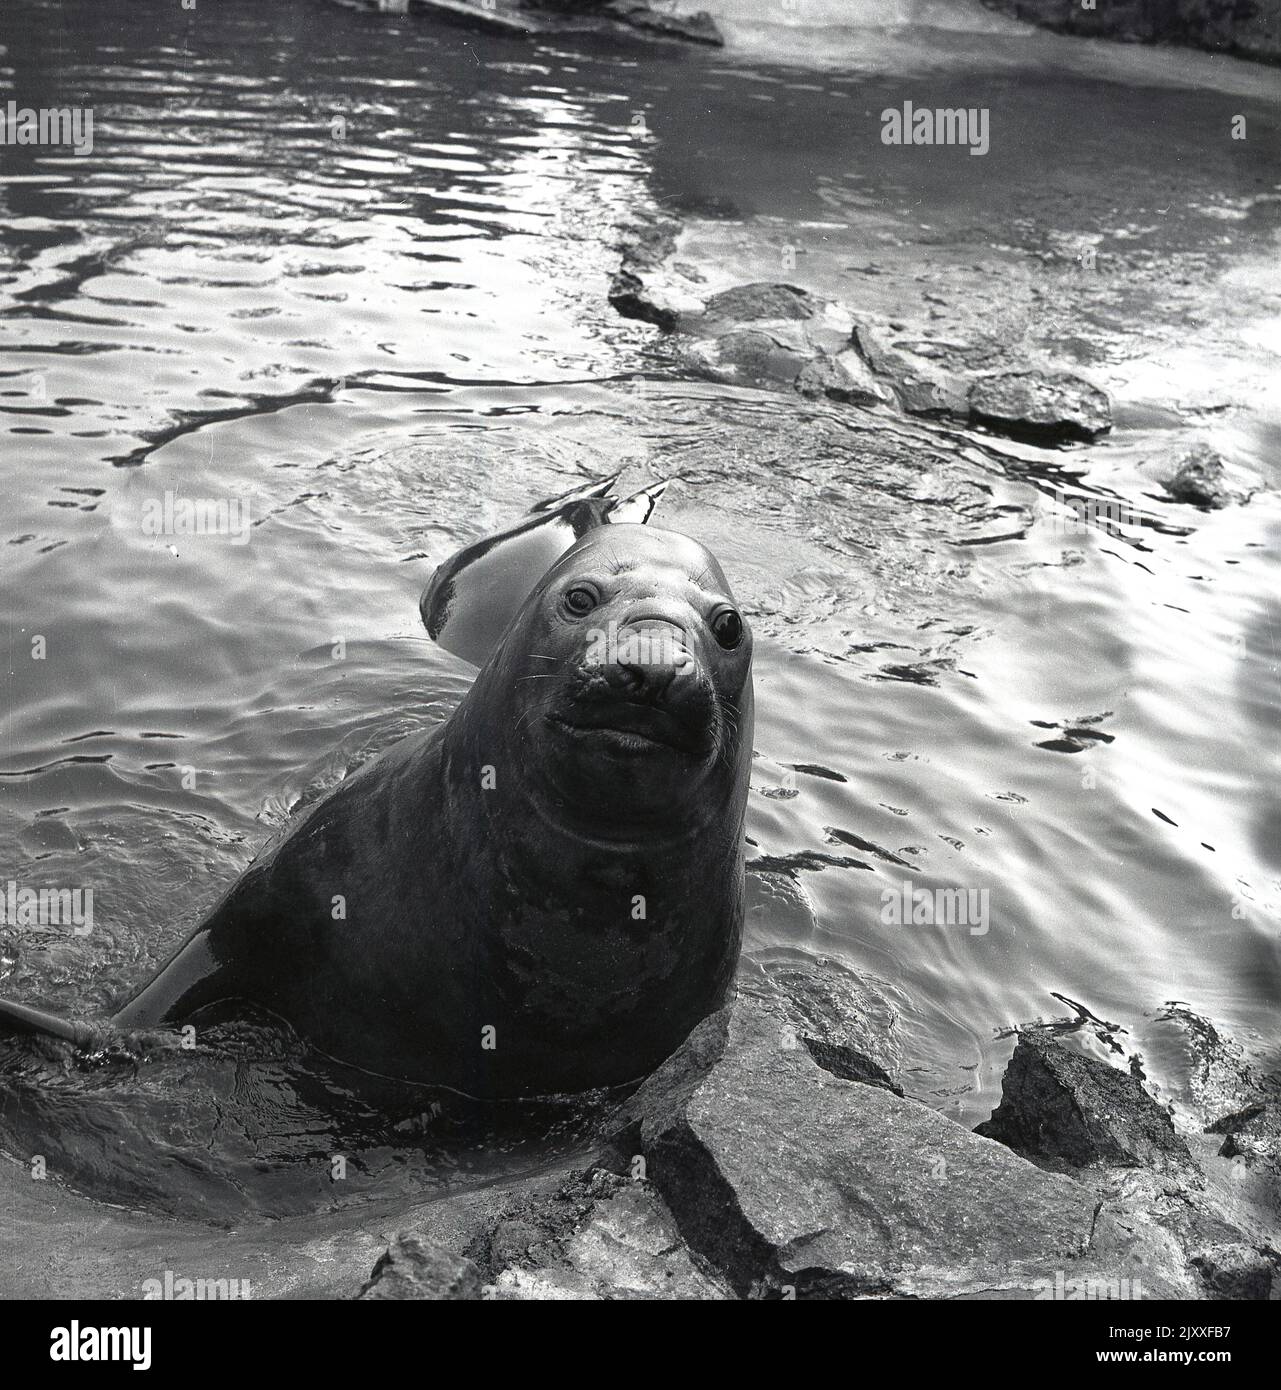 1965, historical, sea lion in water, by rocks, Edinburgh Zoo, Scotland, UK. Stock Photo